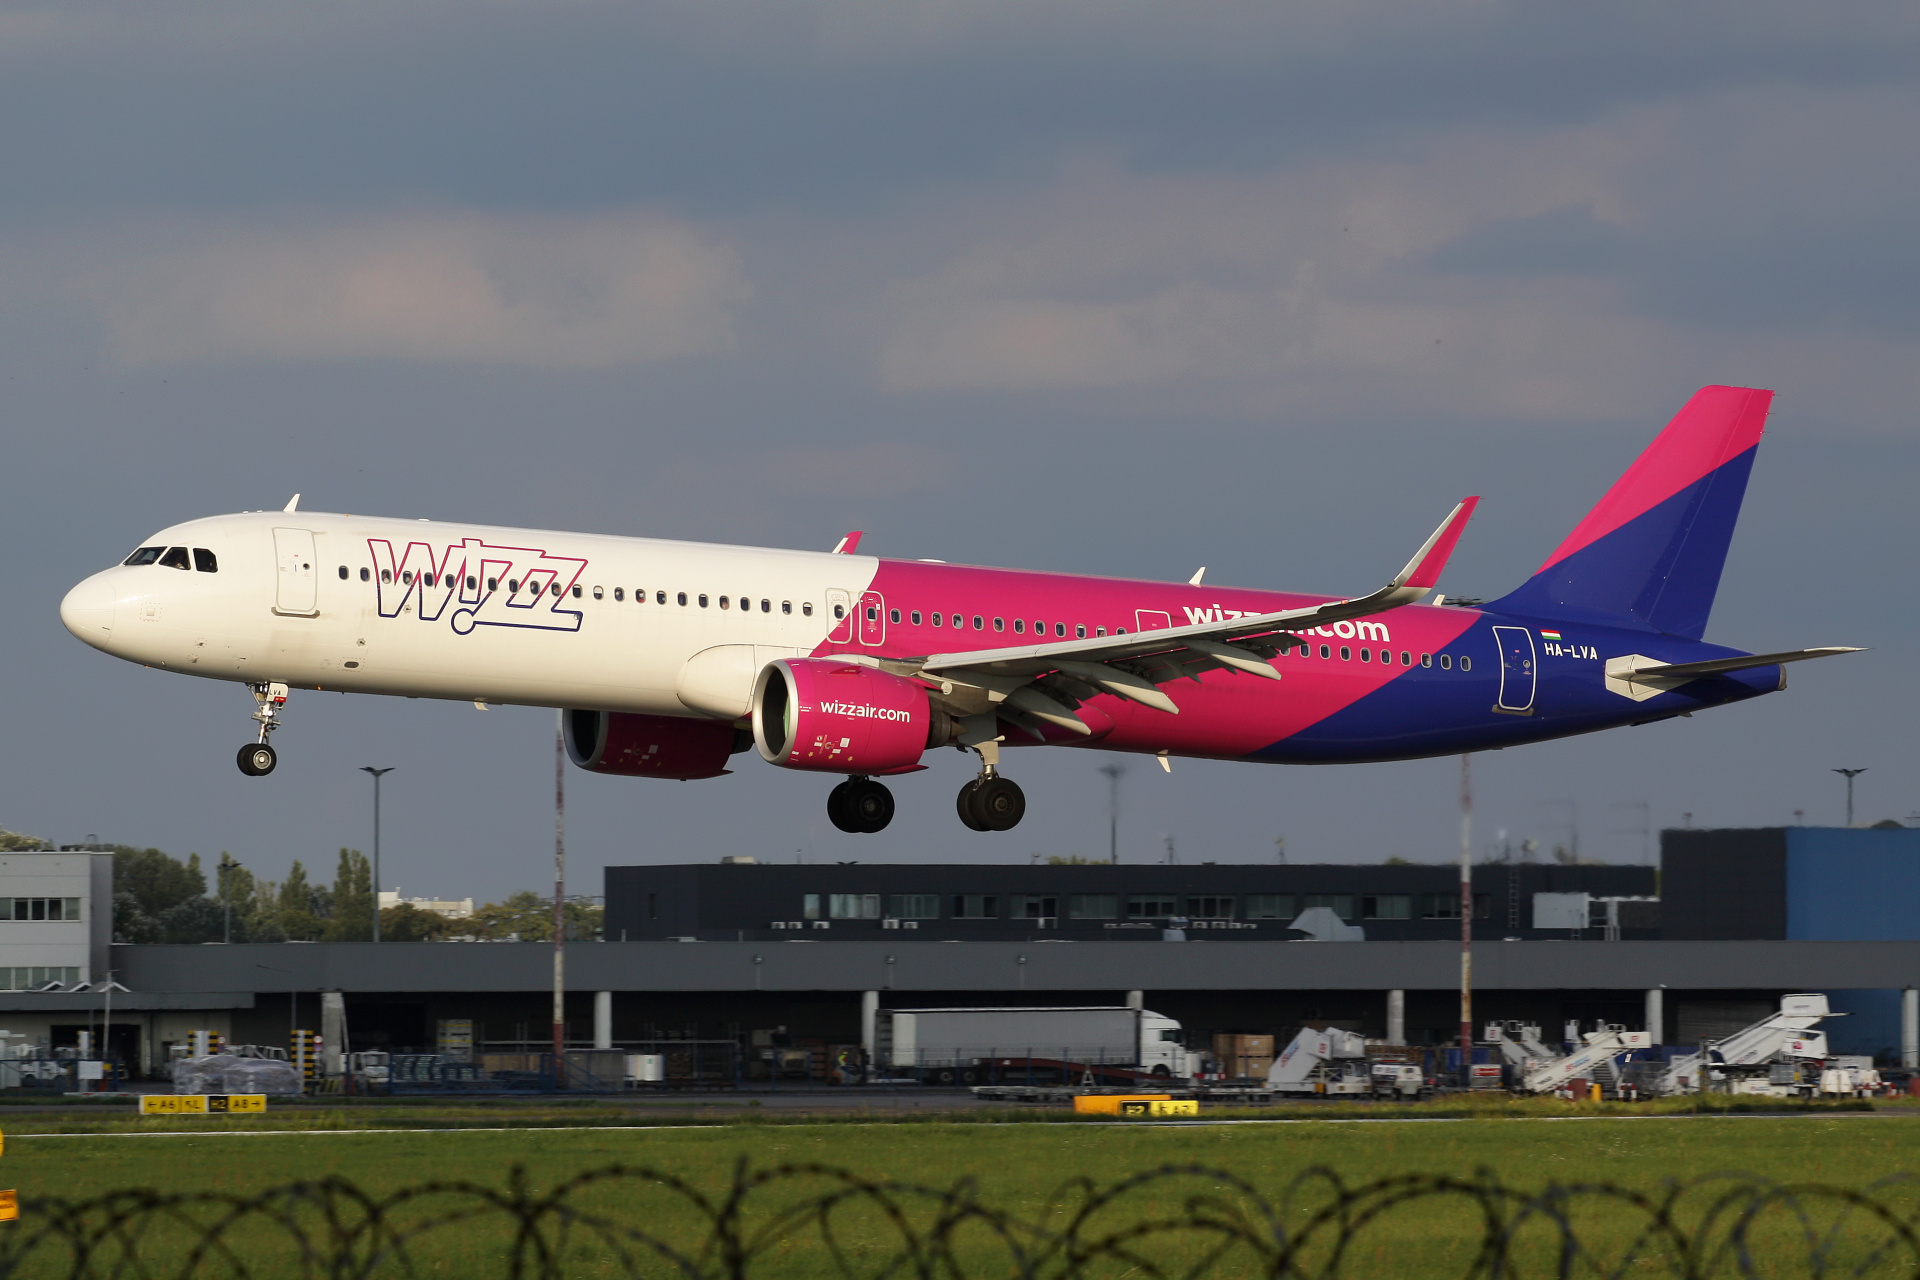 HA-LVA (Aircraft » EPWA Spotting » Airbus A321neo » Wizz Air)